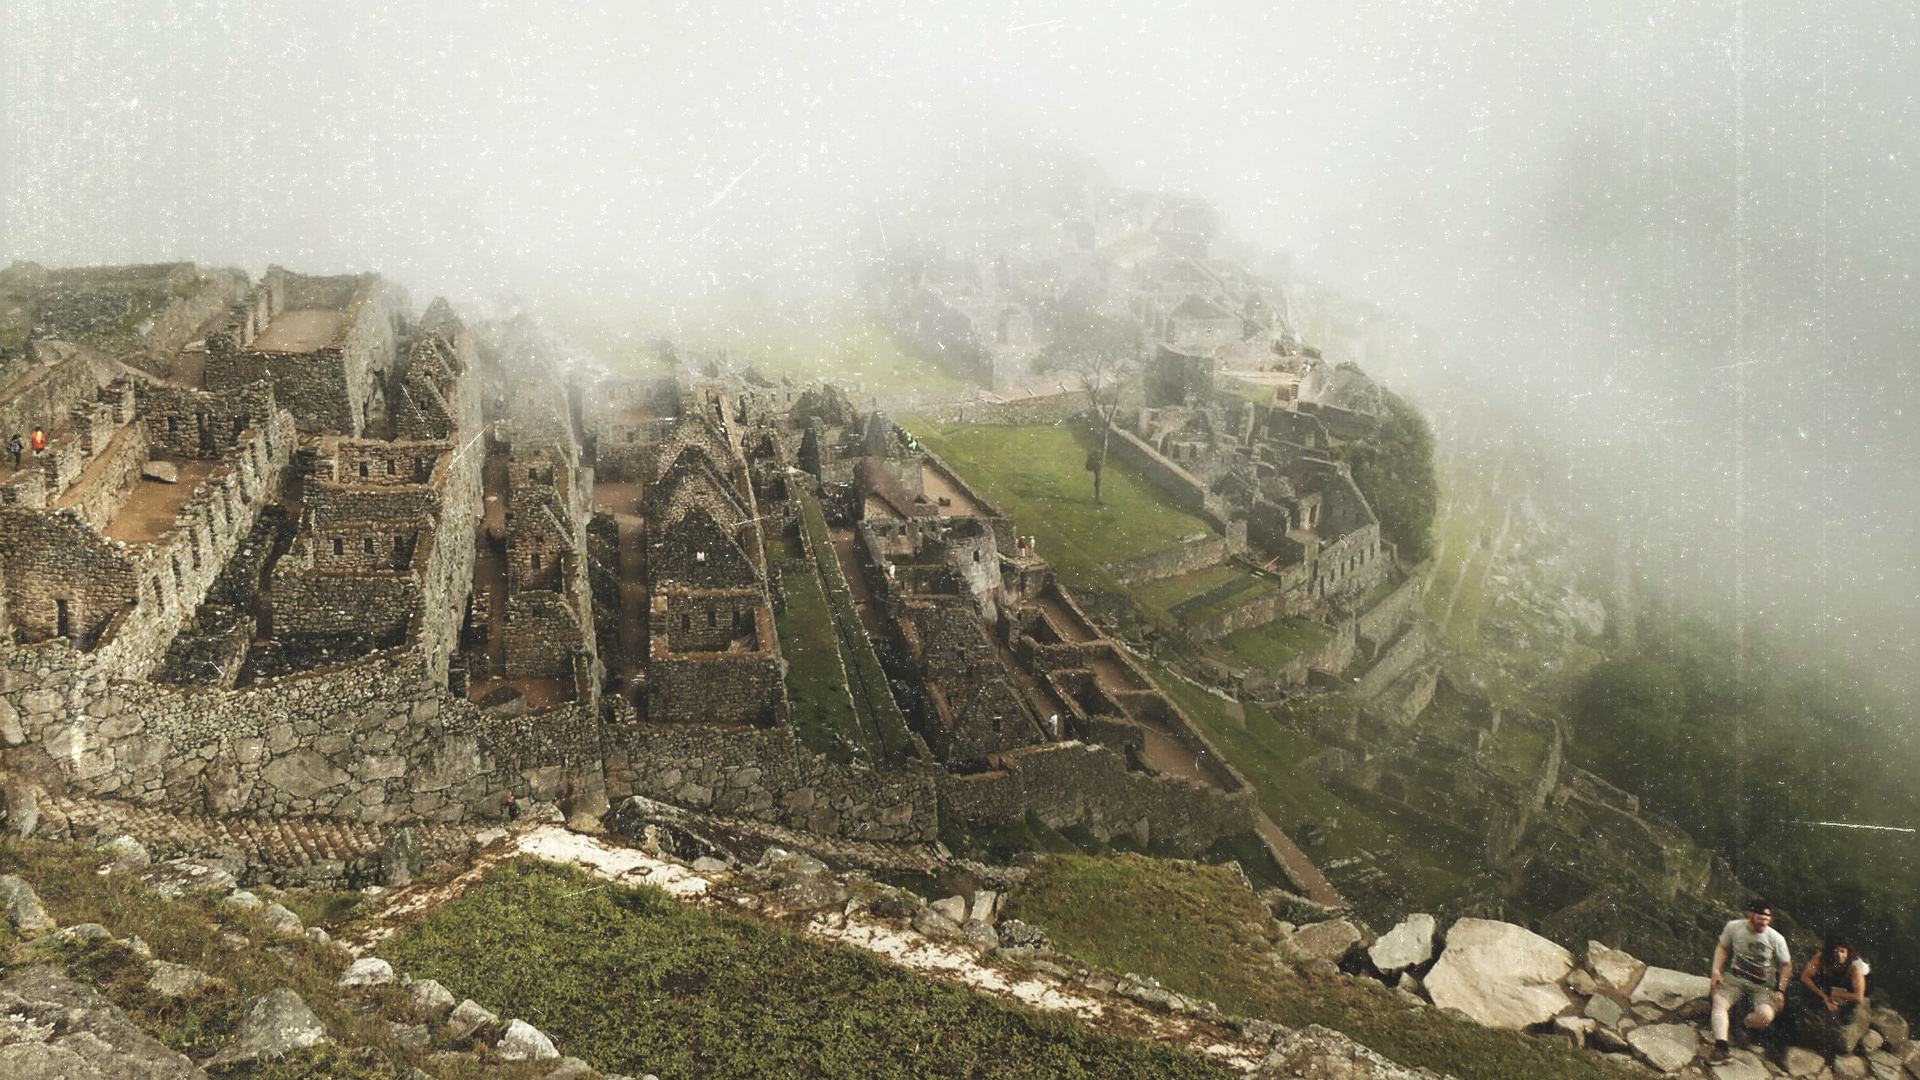 Peru, the magic of the incas